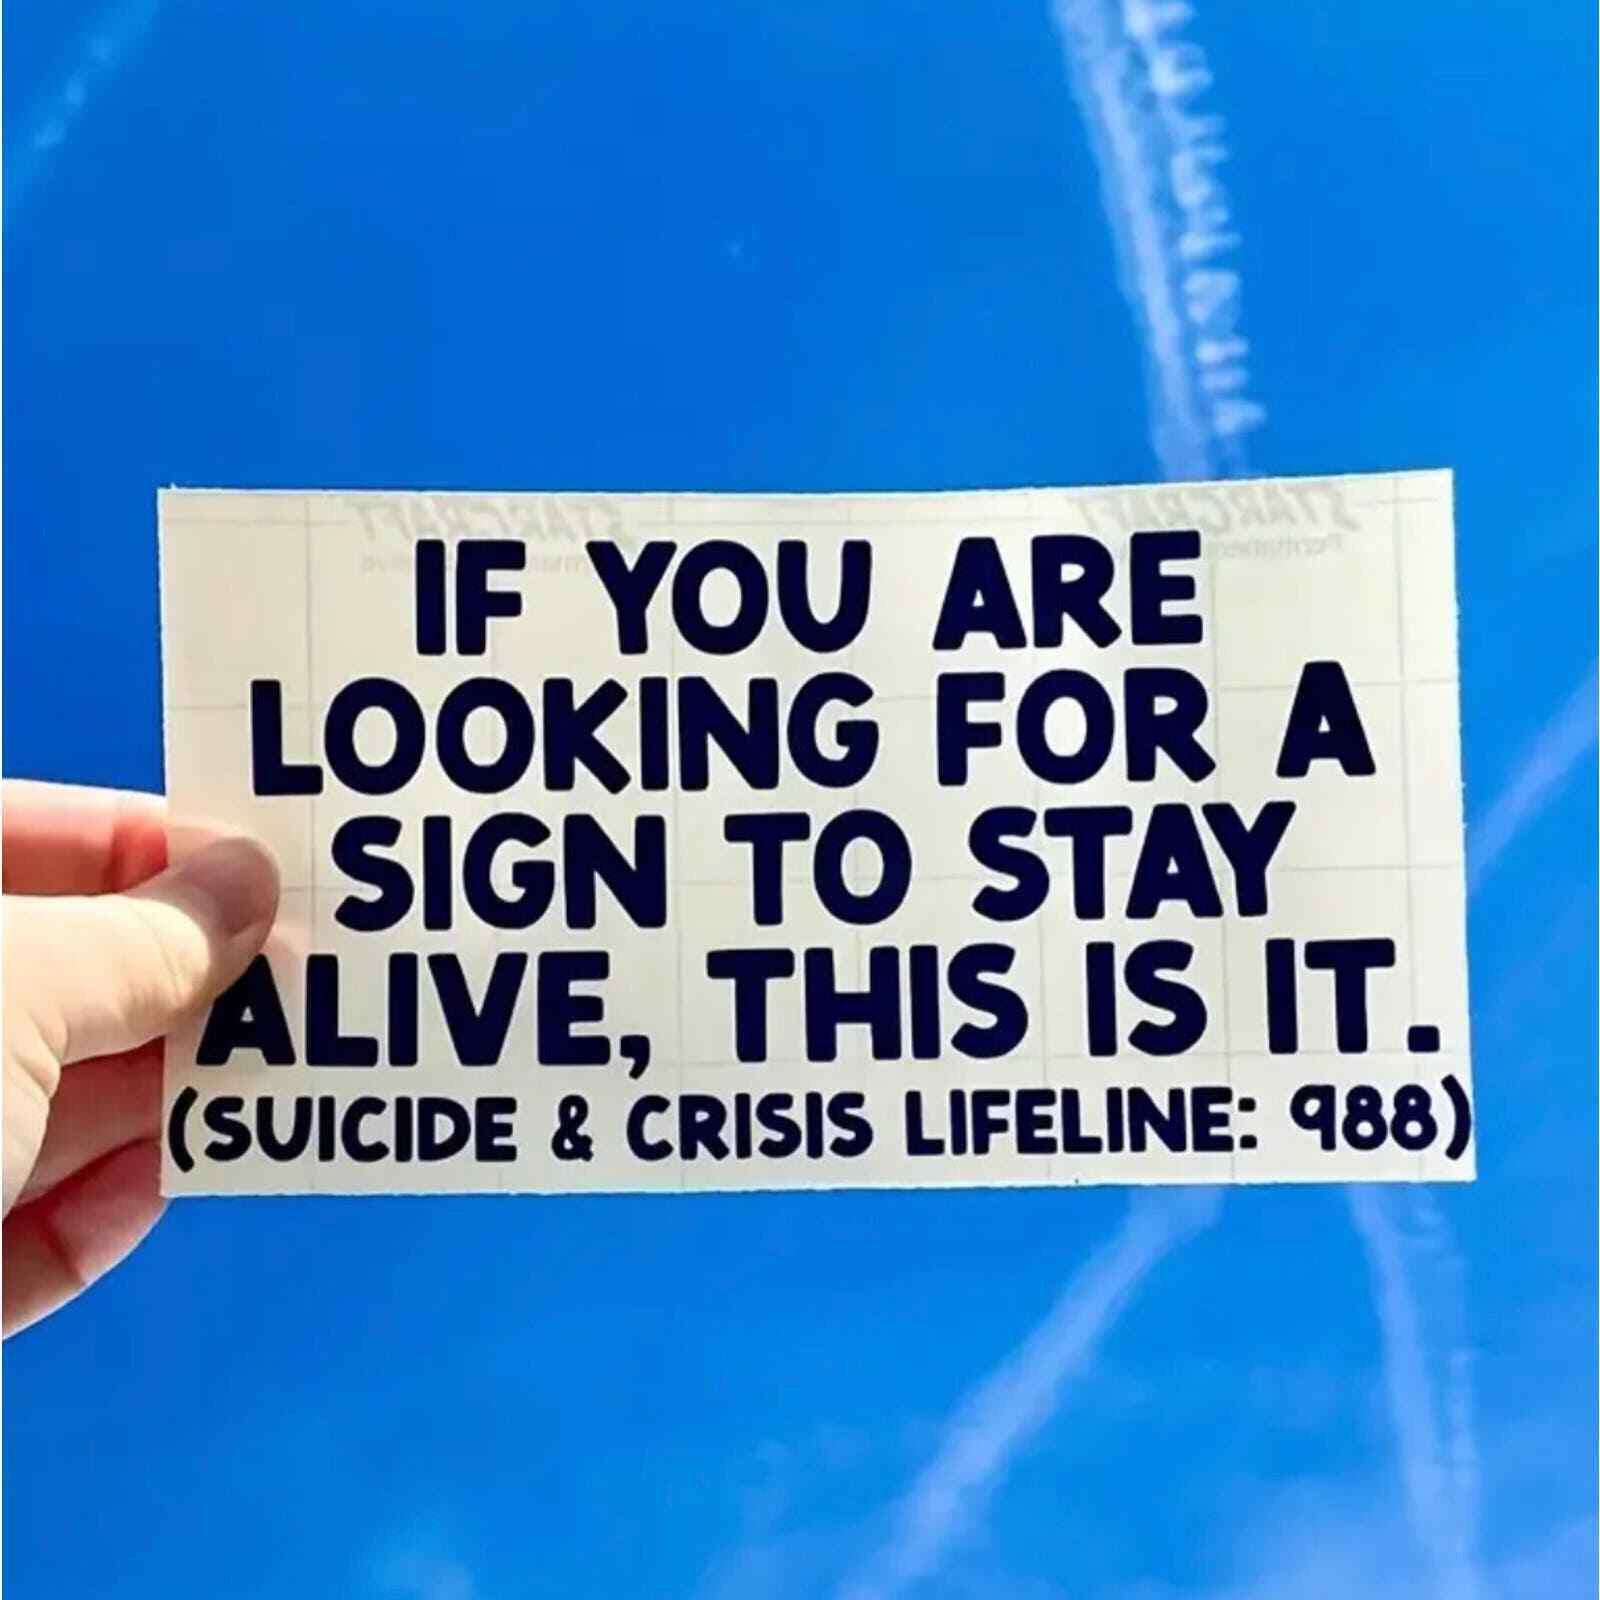 Suicide awareness bumper sticker